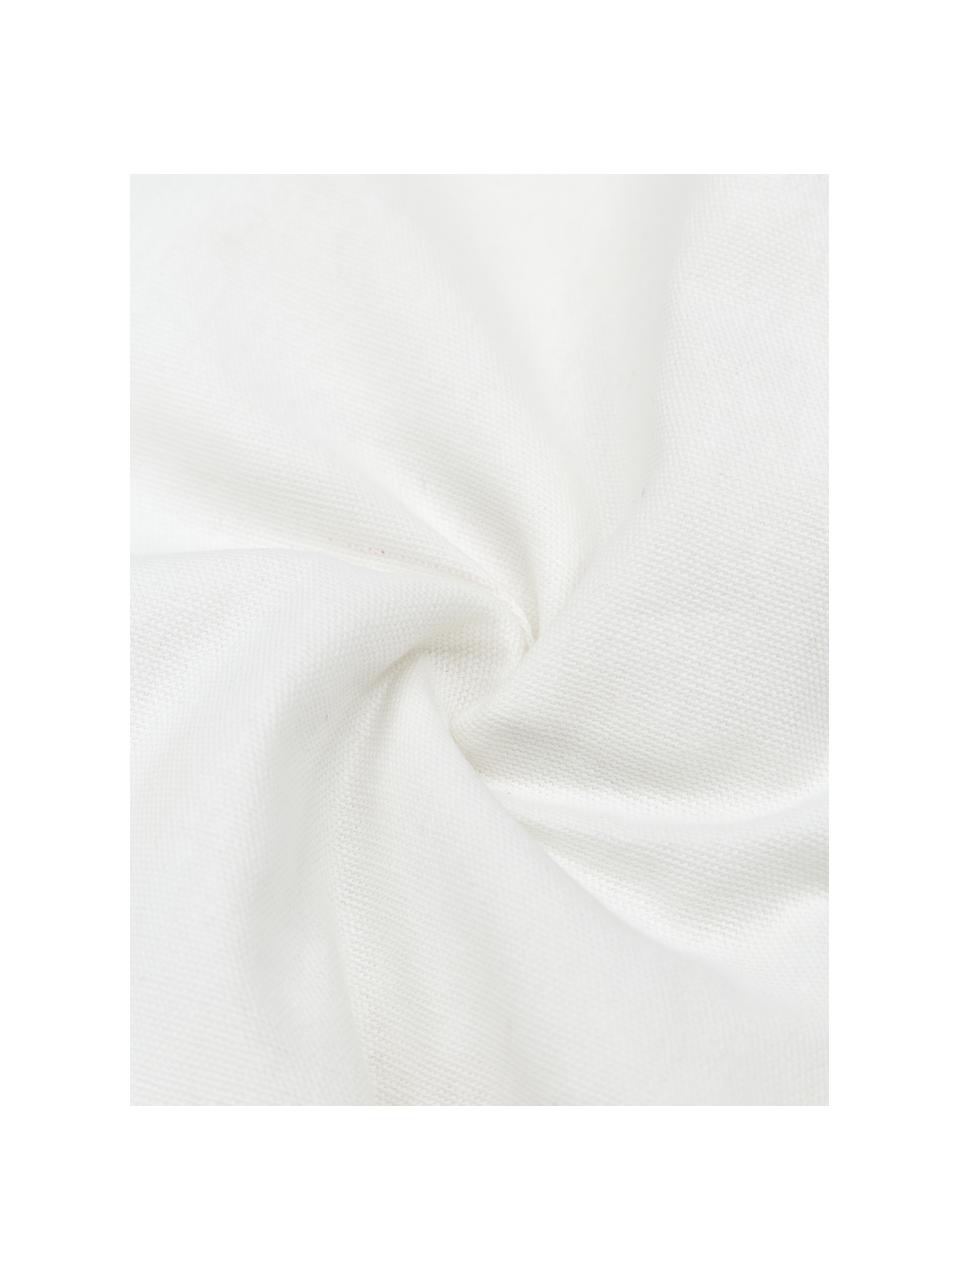 Vyšívaný bavlněný povlak na polštář Terra Nova, 100 % bavlna, Bílá, béžová, černá, Š 40 cm, D 60 cm